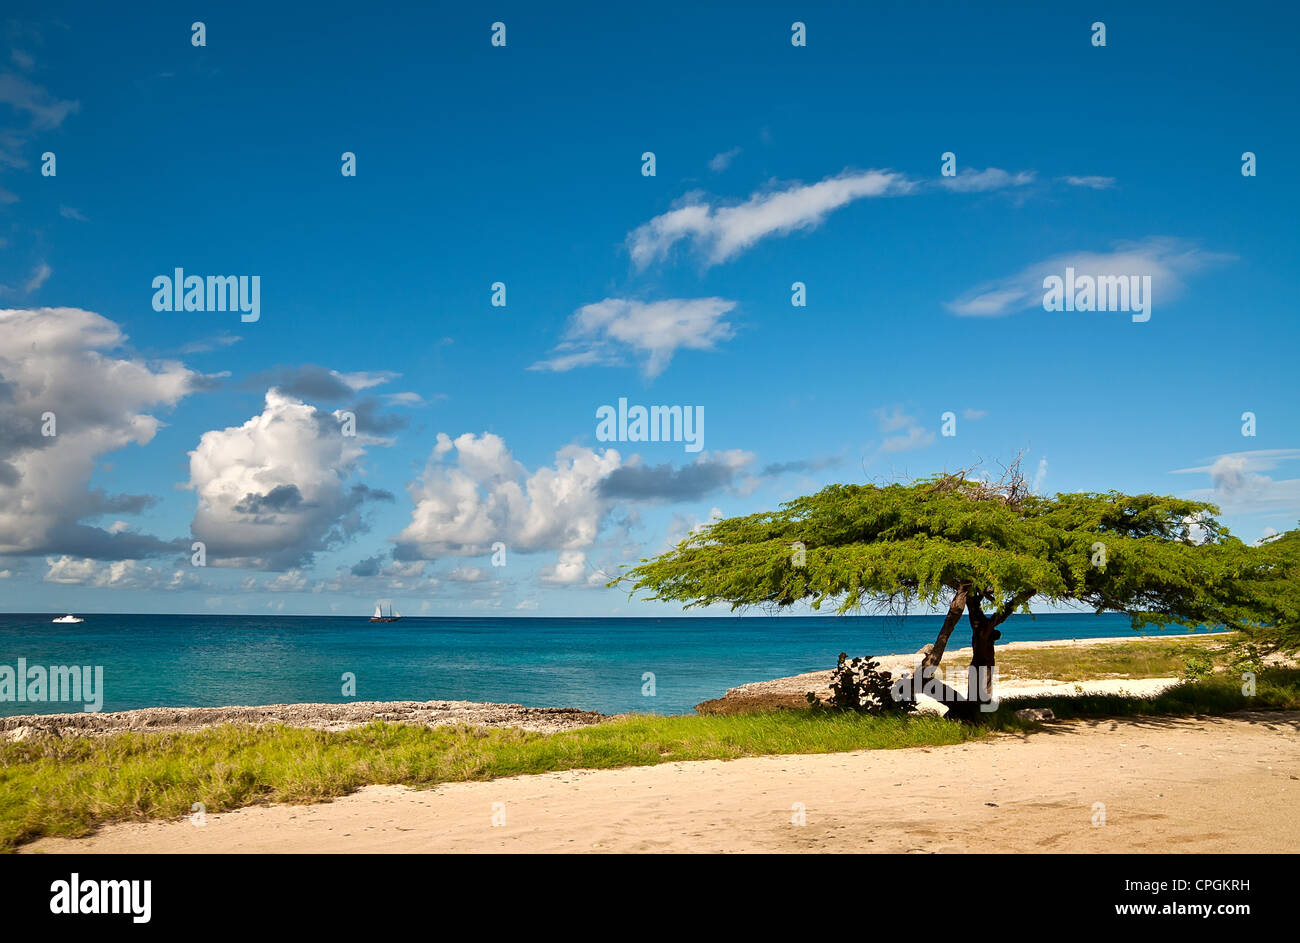 Divi-divi tree on the island of Aruba. Tropical sea beach. Stock Photo